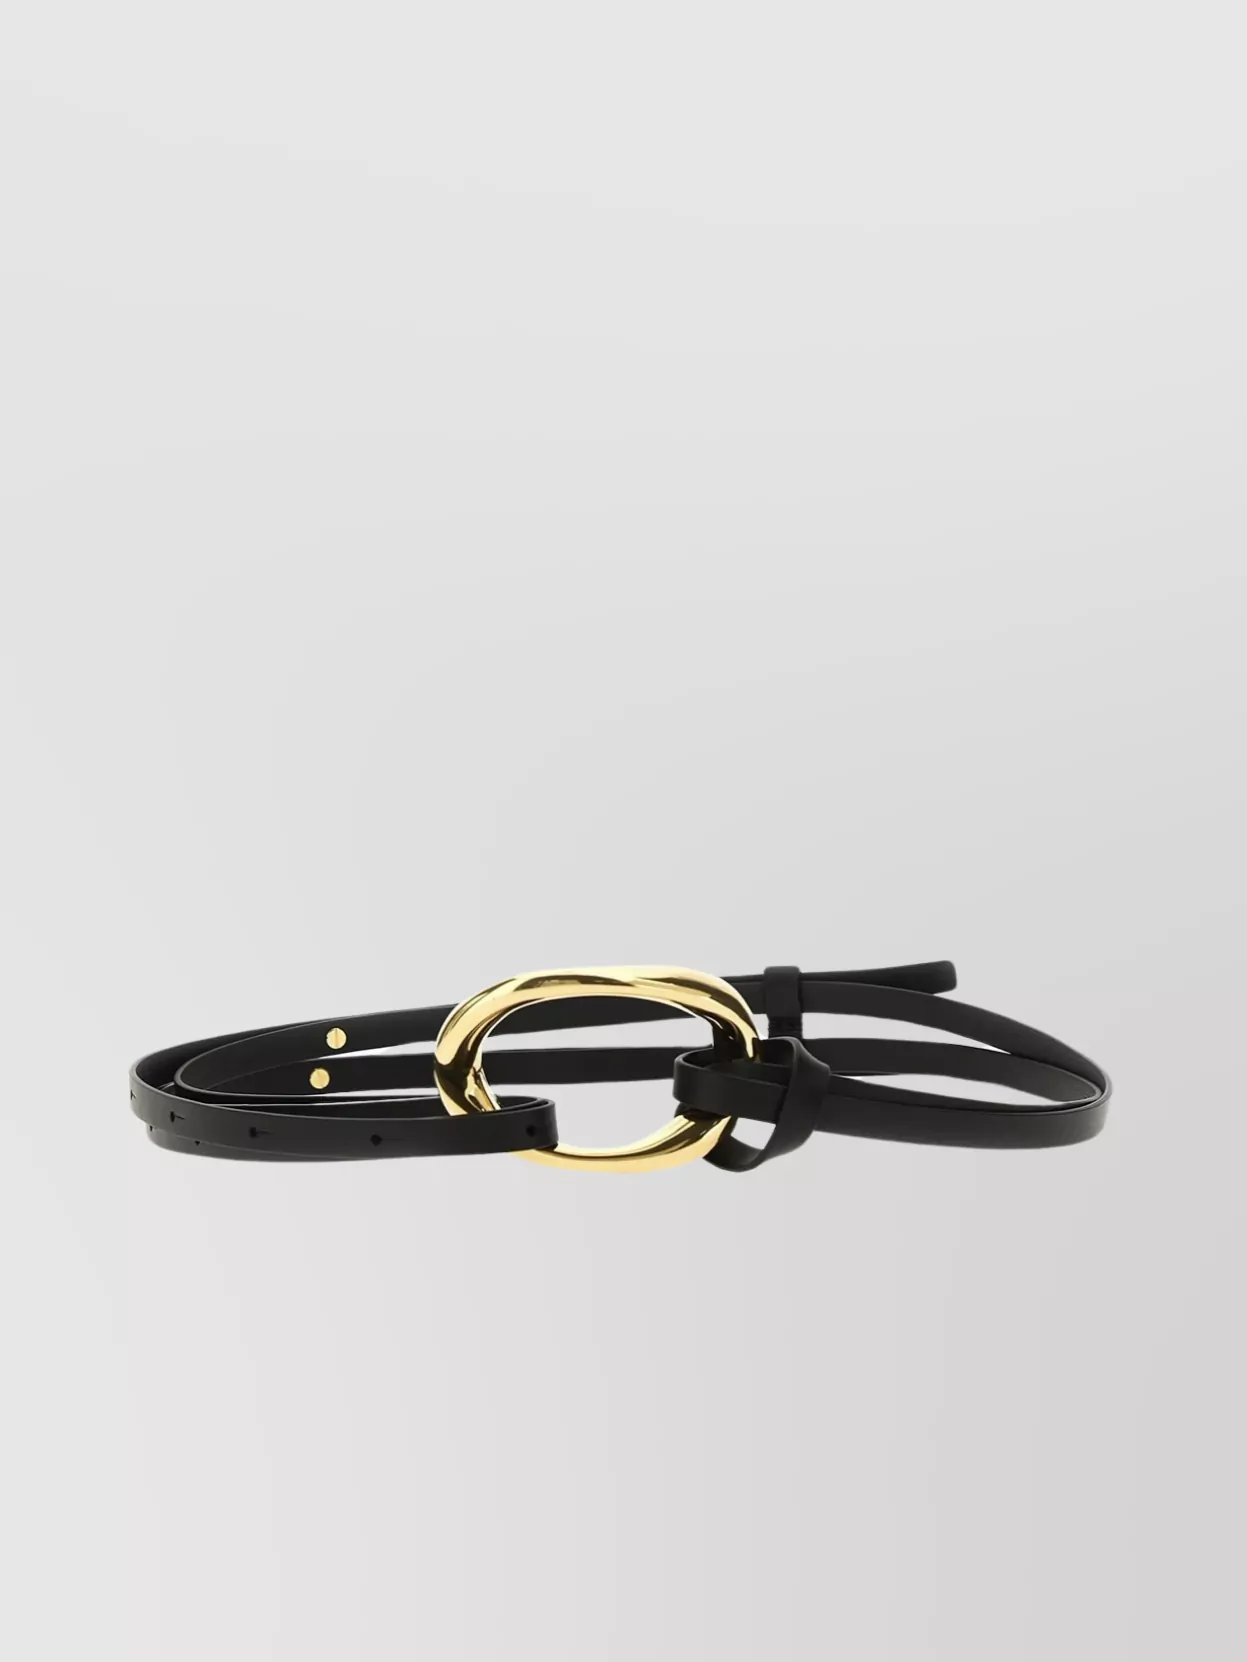 Jil Sander Leather Belt With Adjustable Length And Double Strap Design